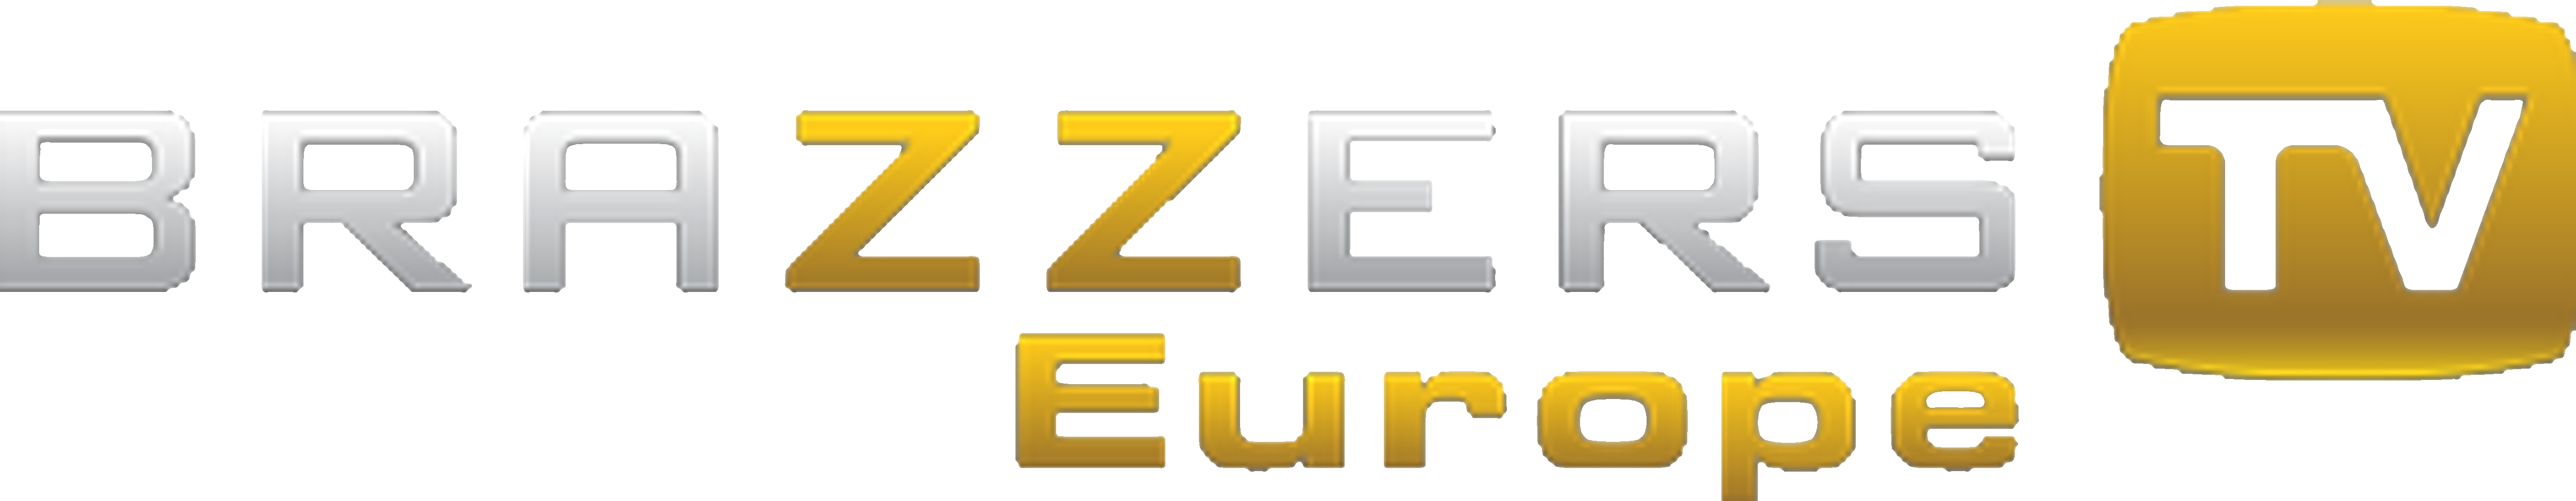 Brazzers Tv Europe Hd Telegraph 